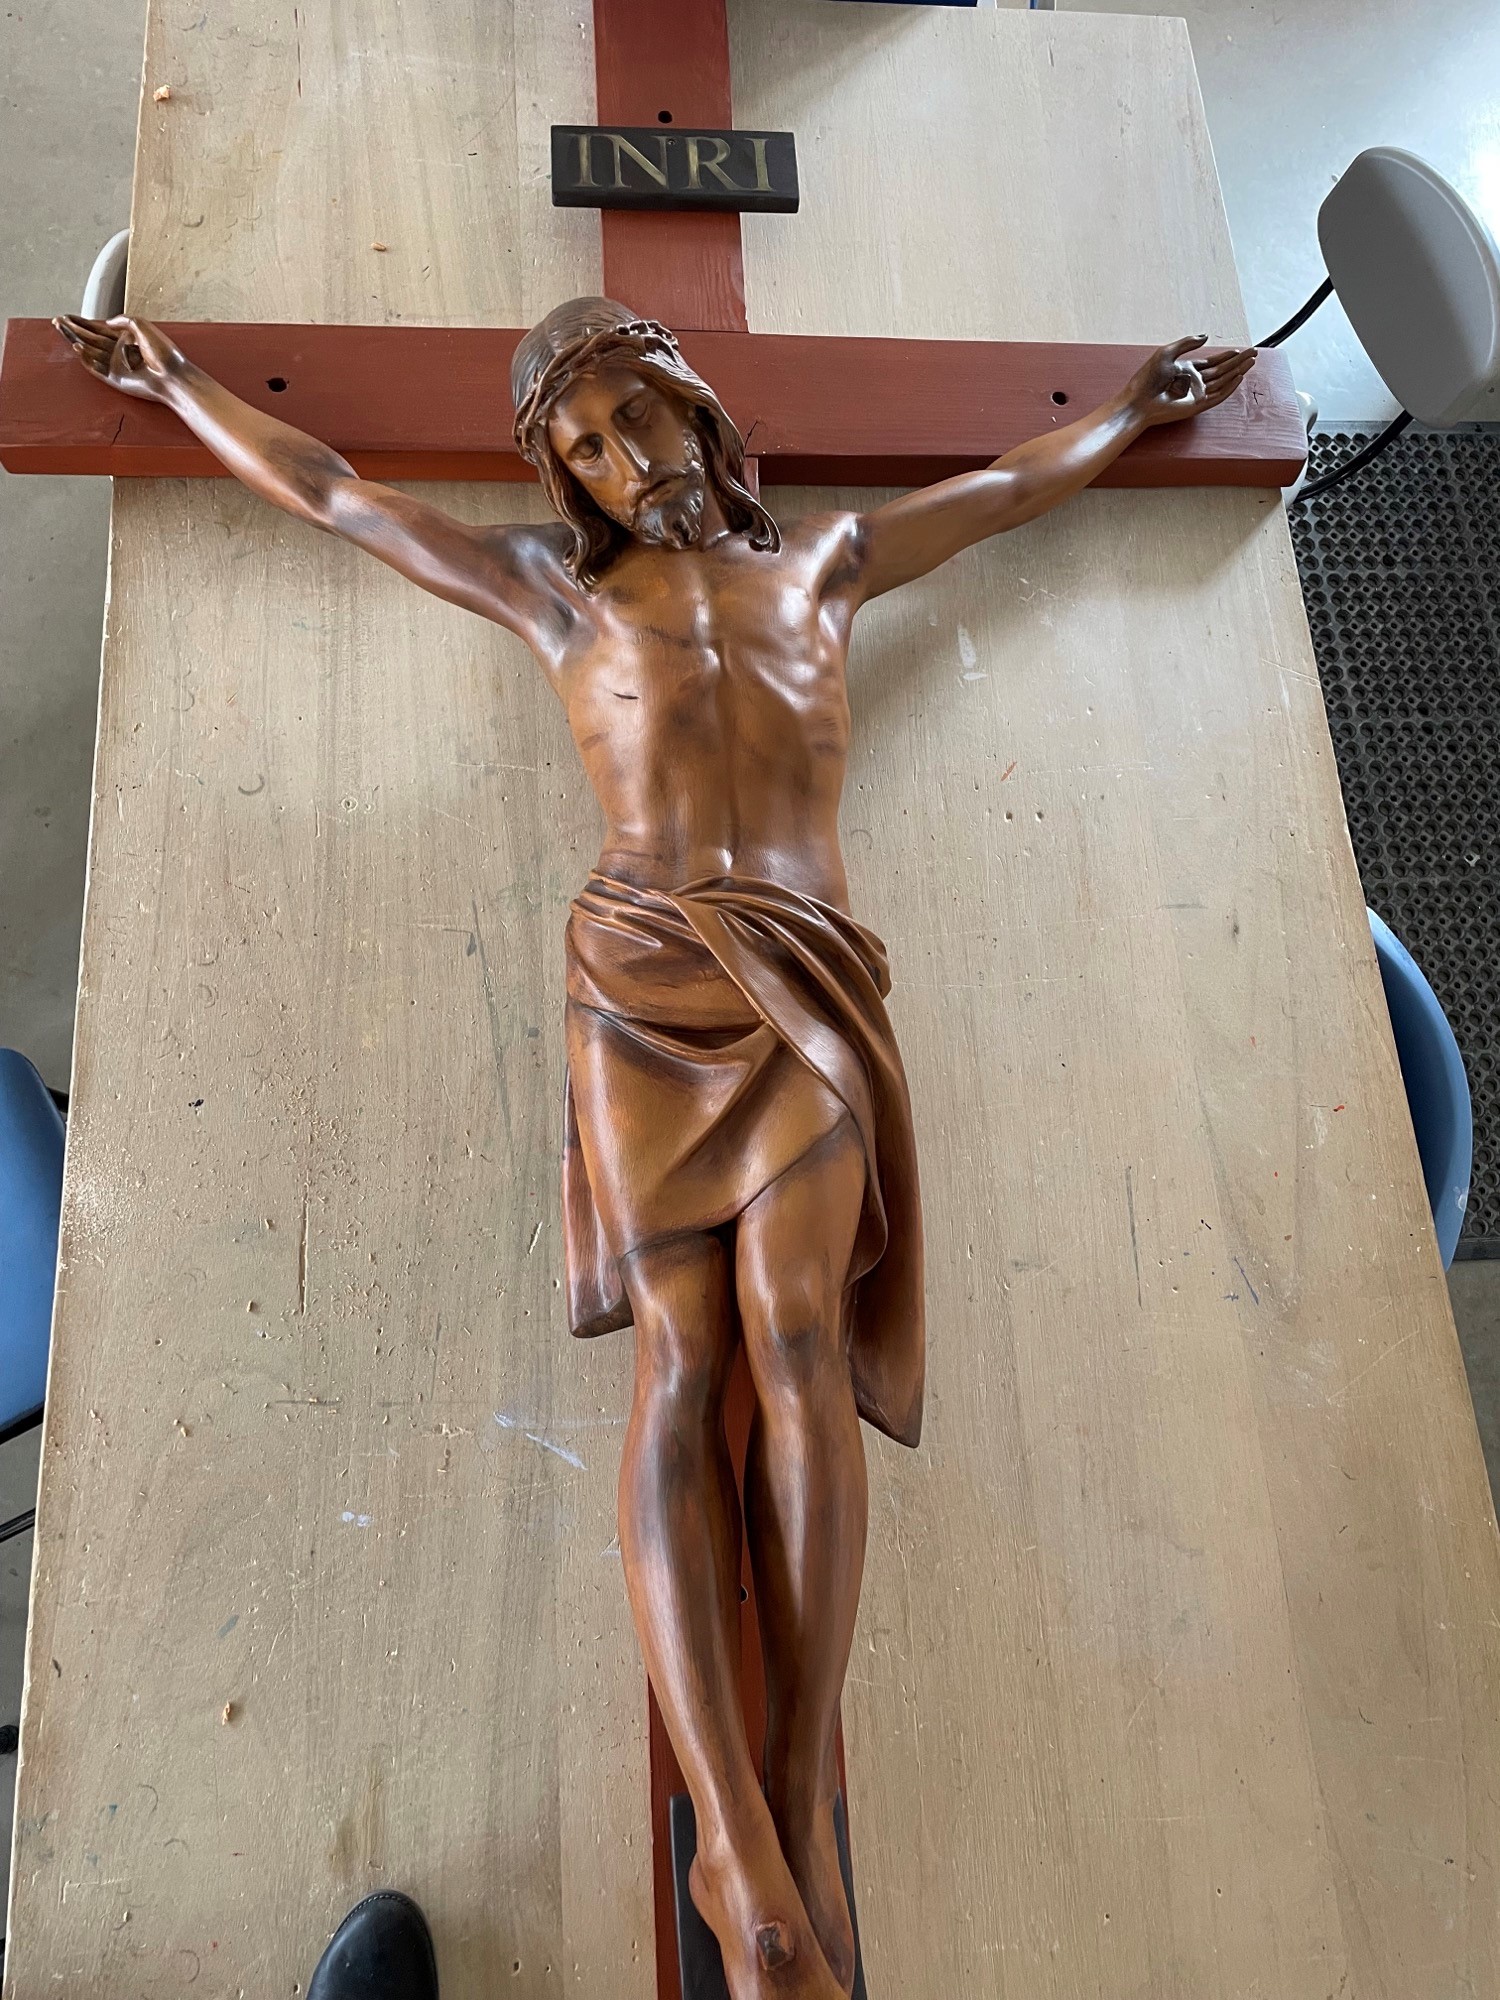 Long-forgotten crucifix restored at Blackfriars